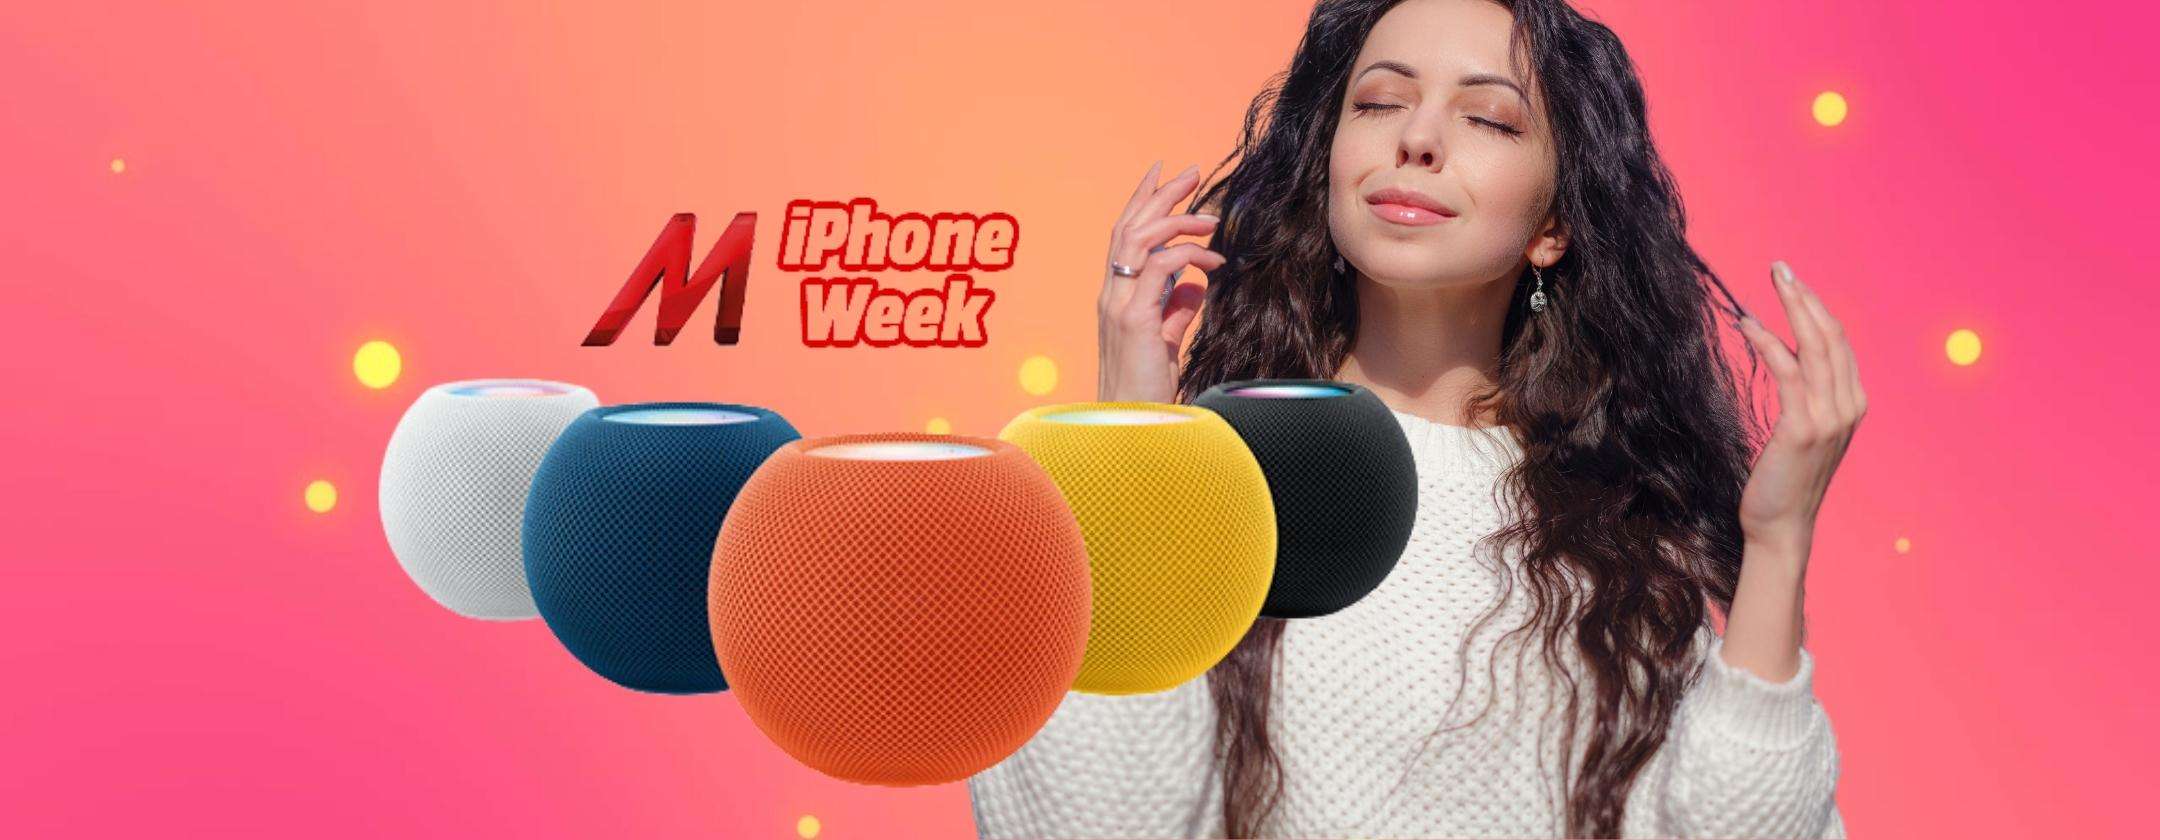 iPhone Week di MediaWorld: le offerte sono da urlo